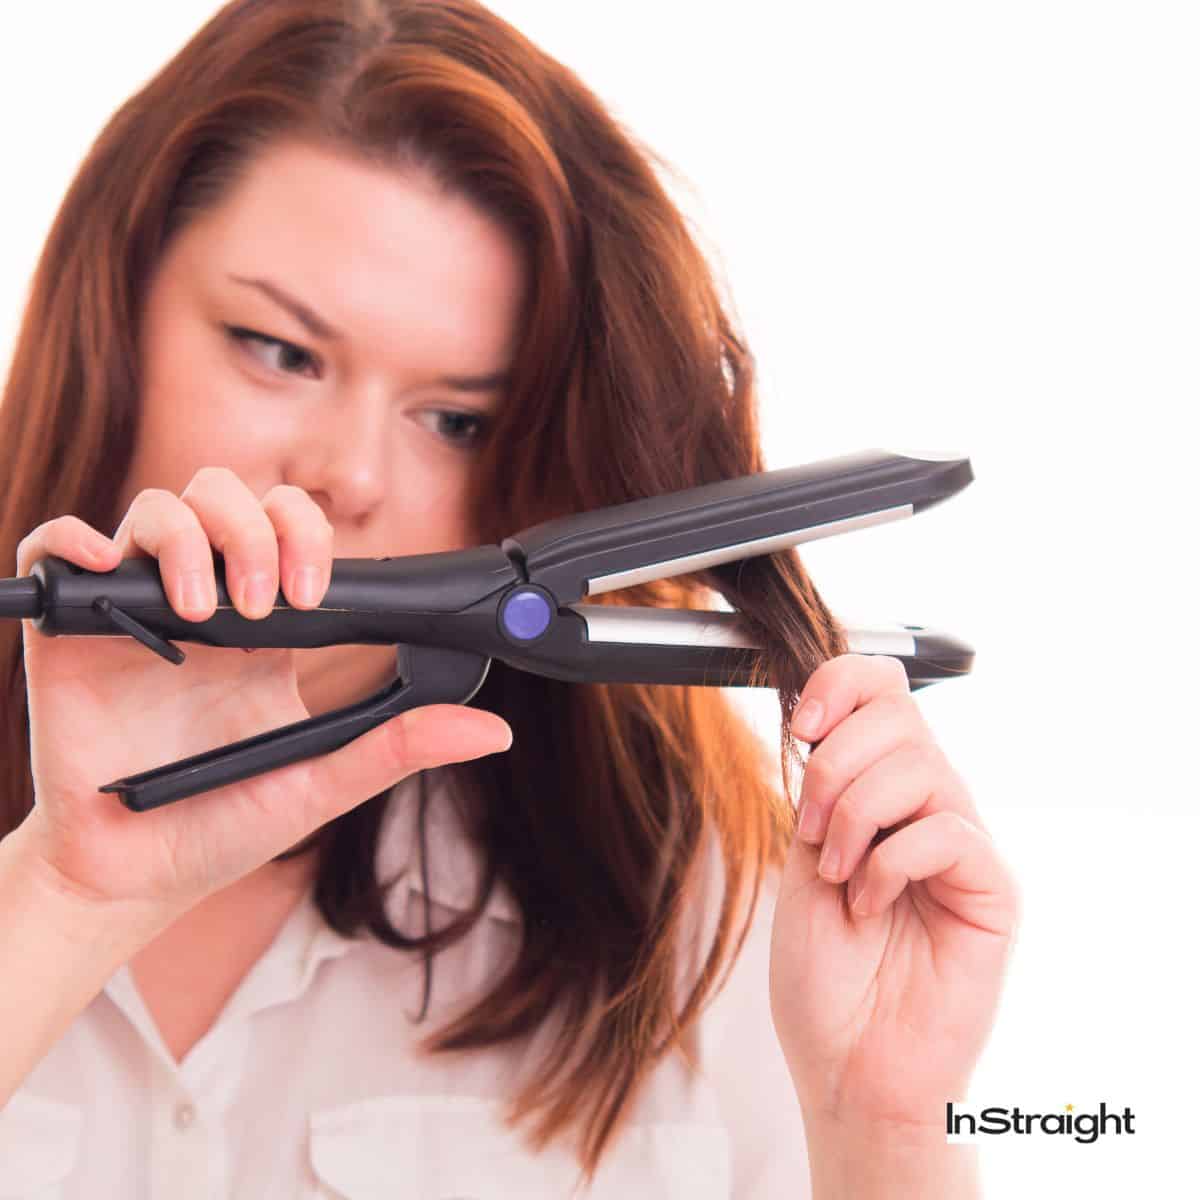 women killing lice using a hair straightener but does hair straightener kill lice